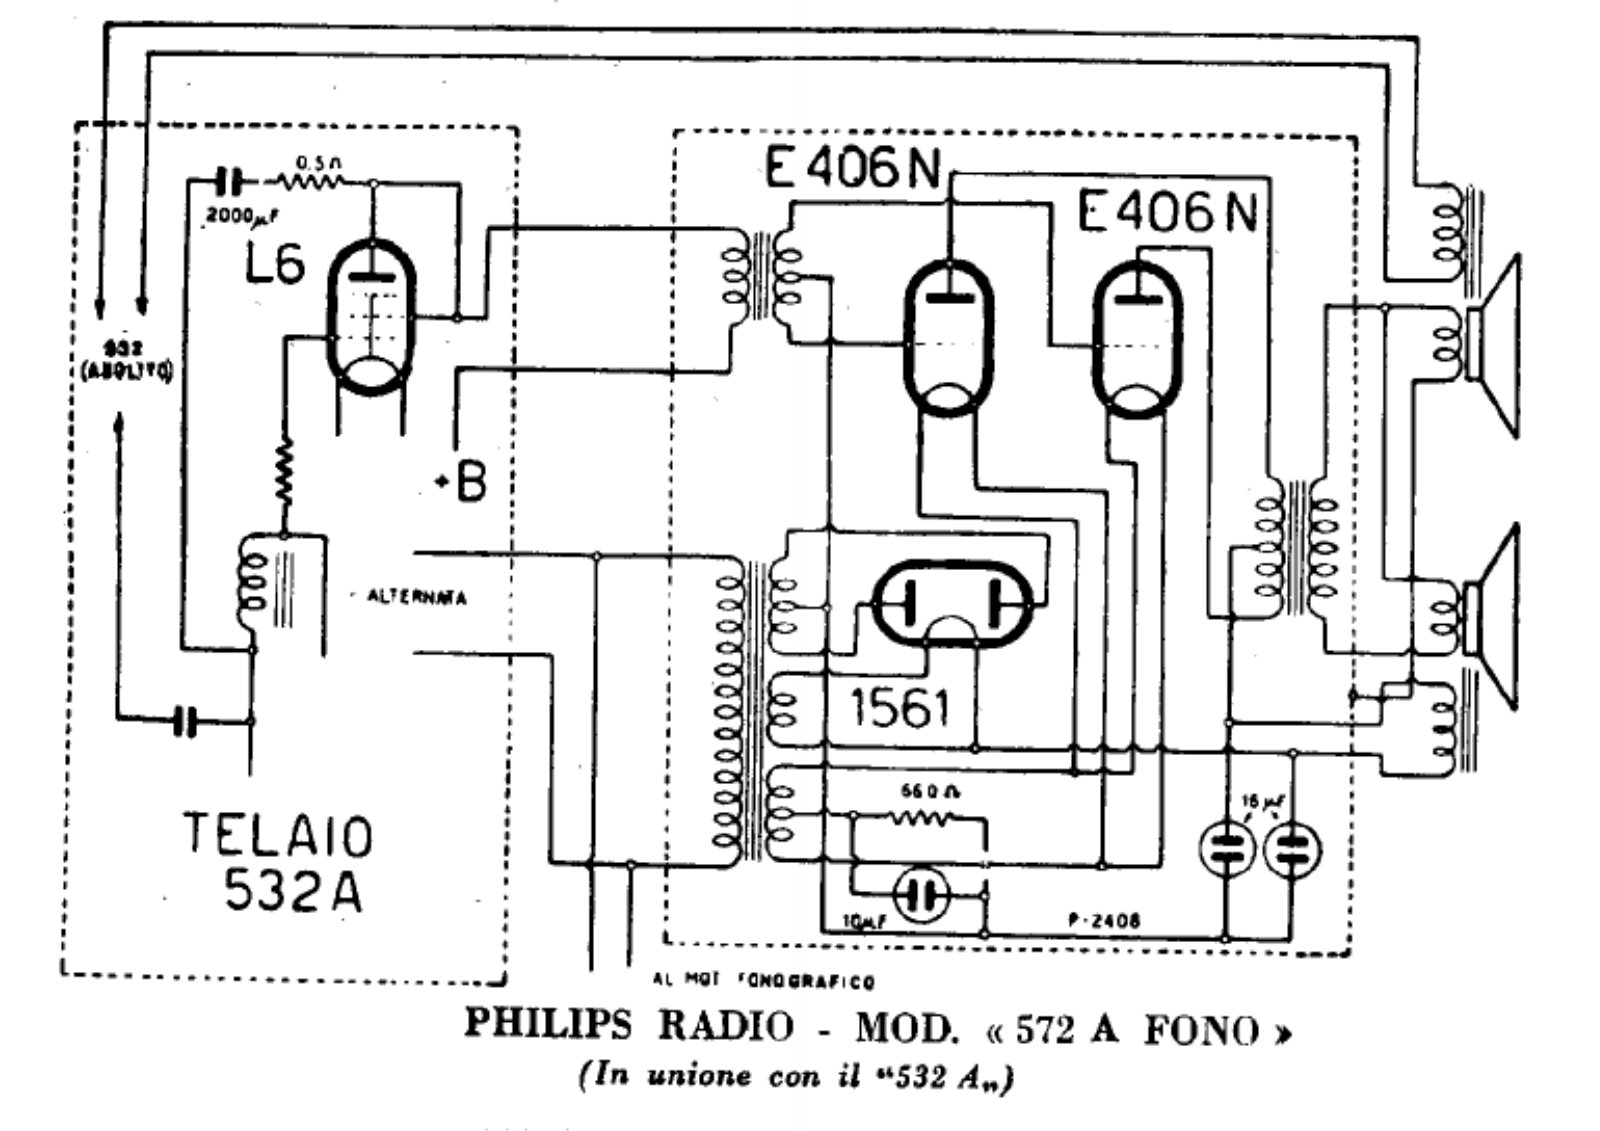 Philips 572a schematic